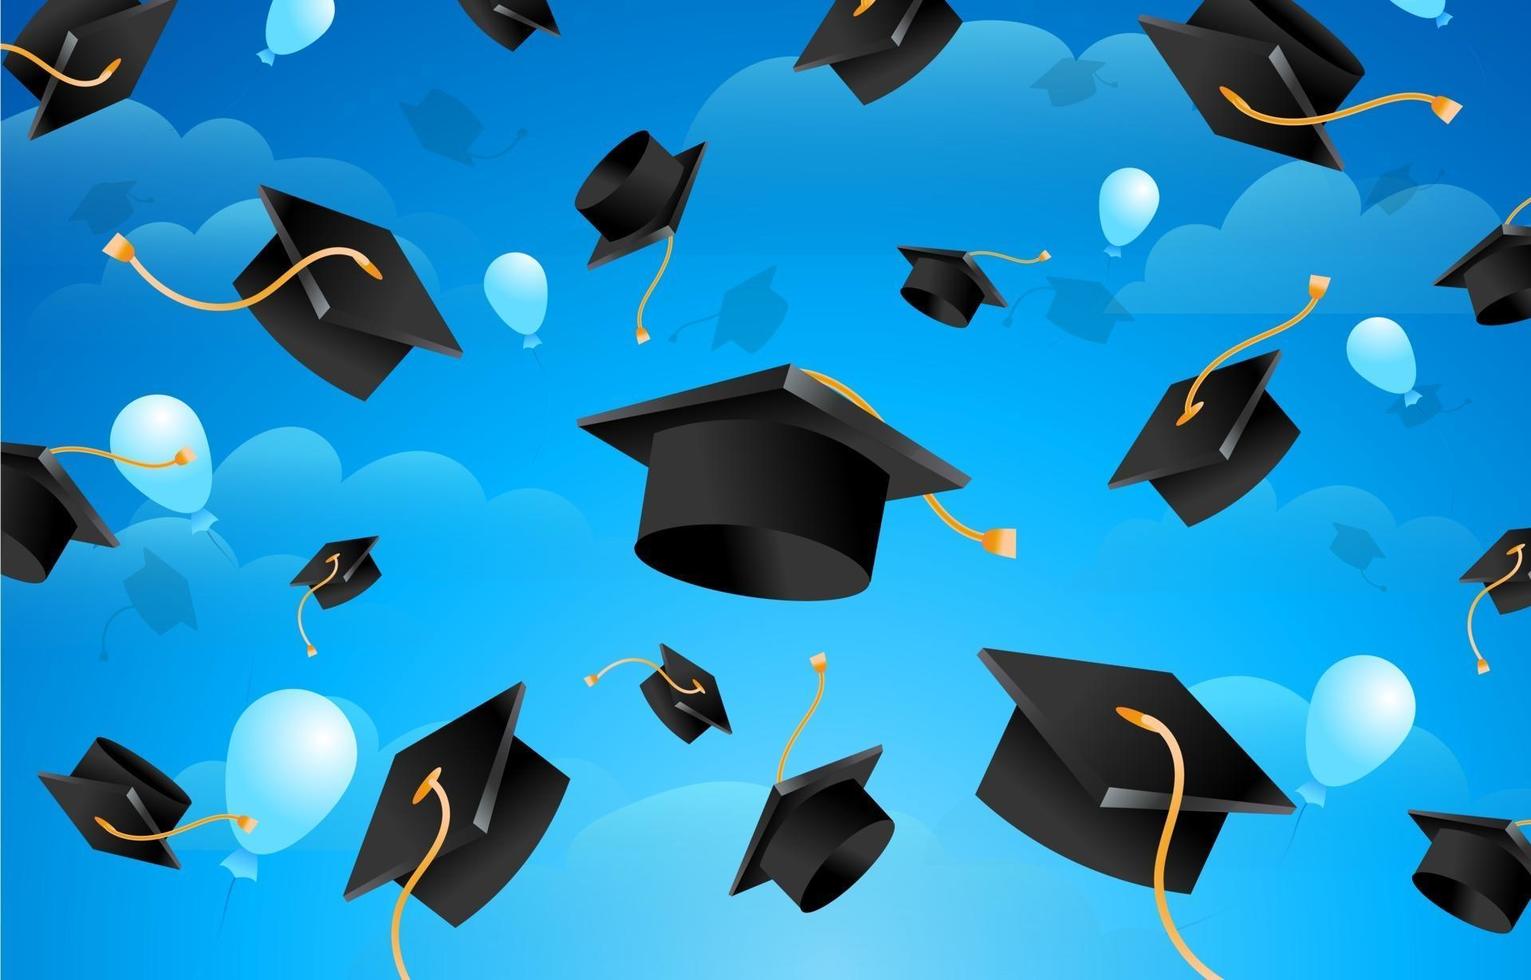 Graduation Caps in the Air vector